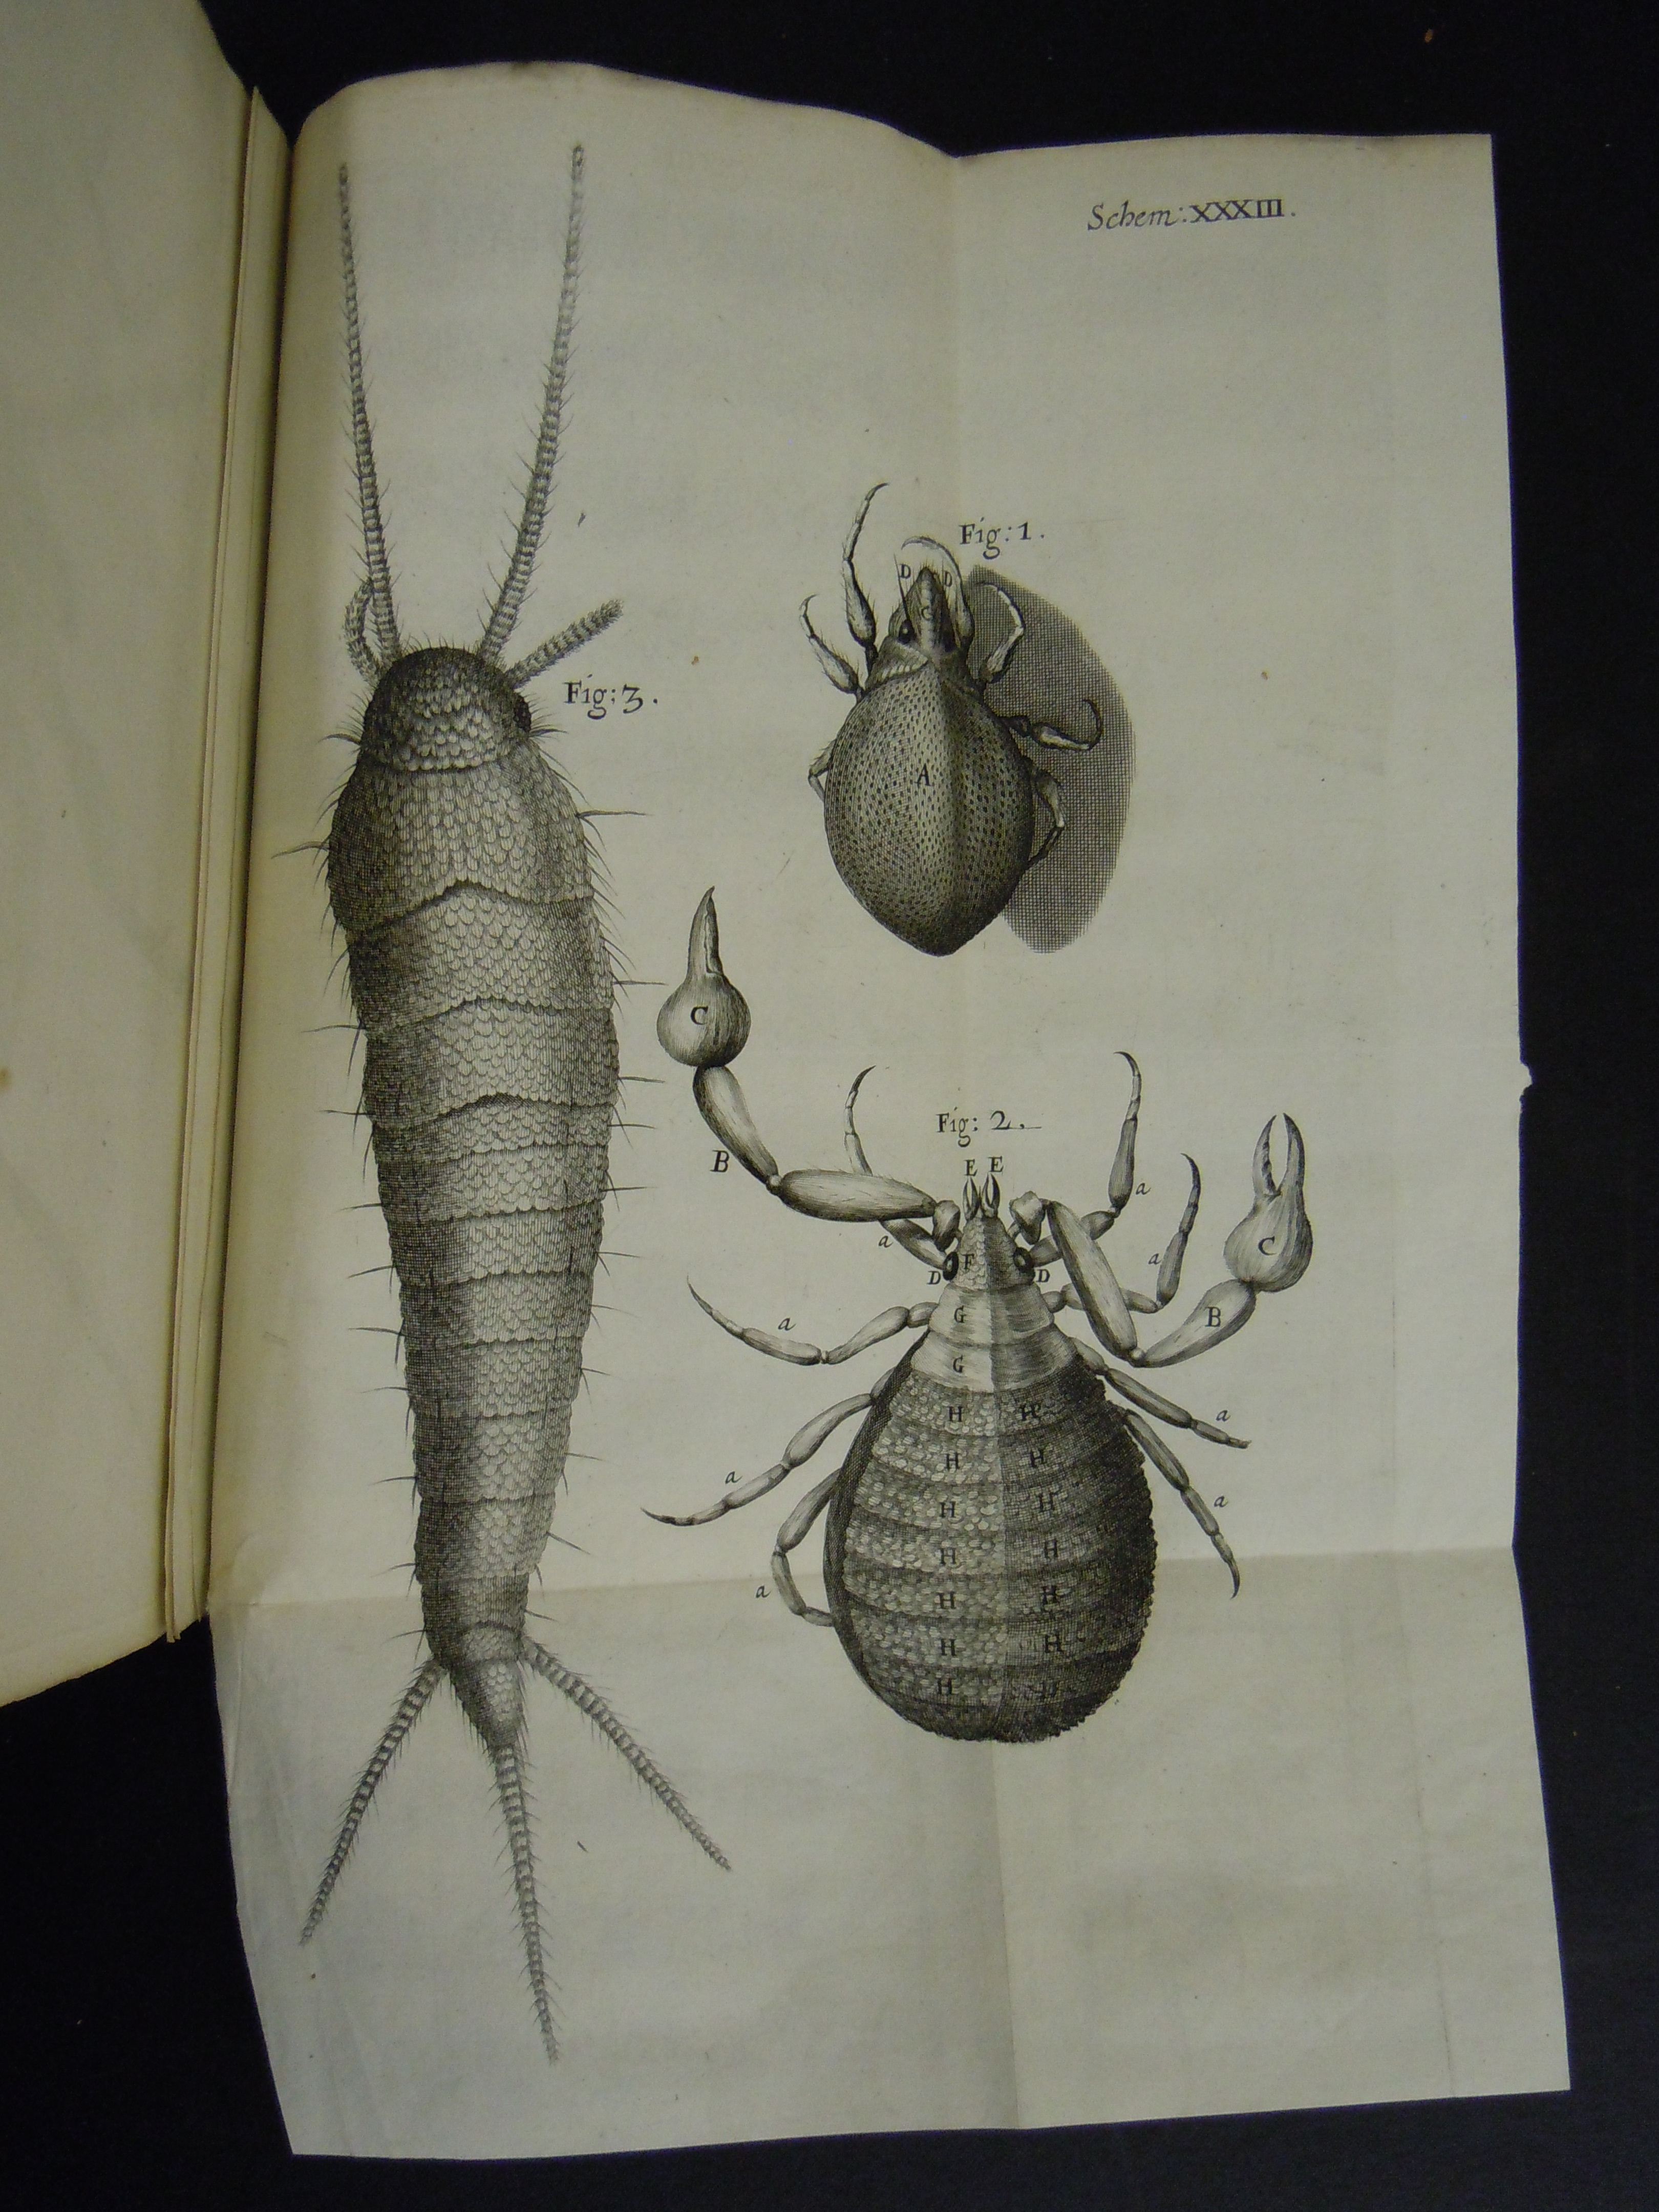 BT1.31.14, pl. xxxiii, Robert Hooke鈥檚 Micrographia (1665)